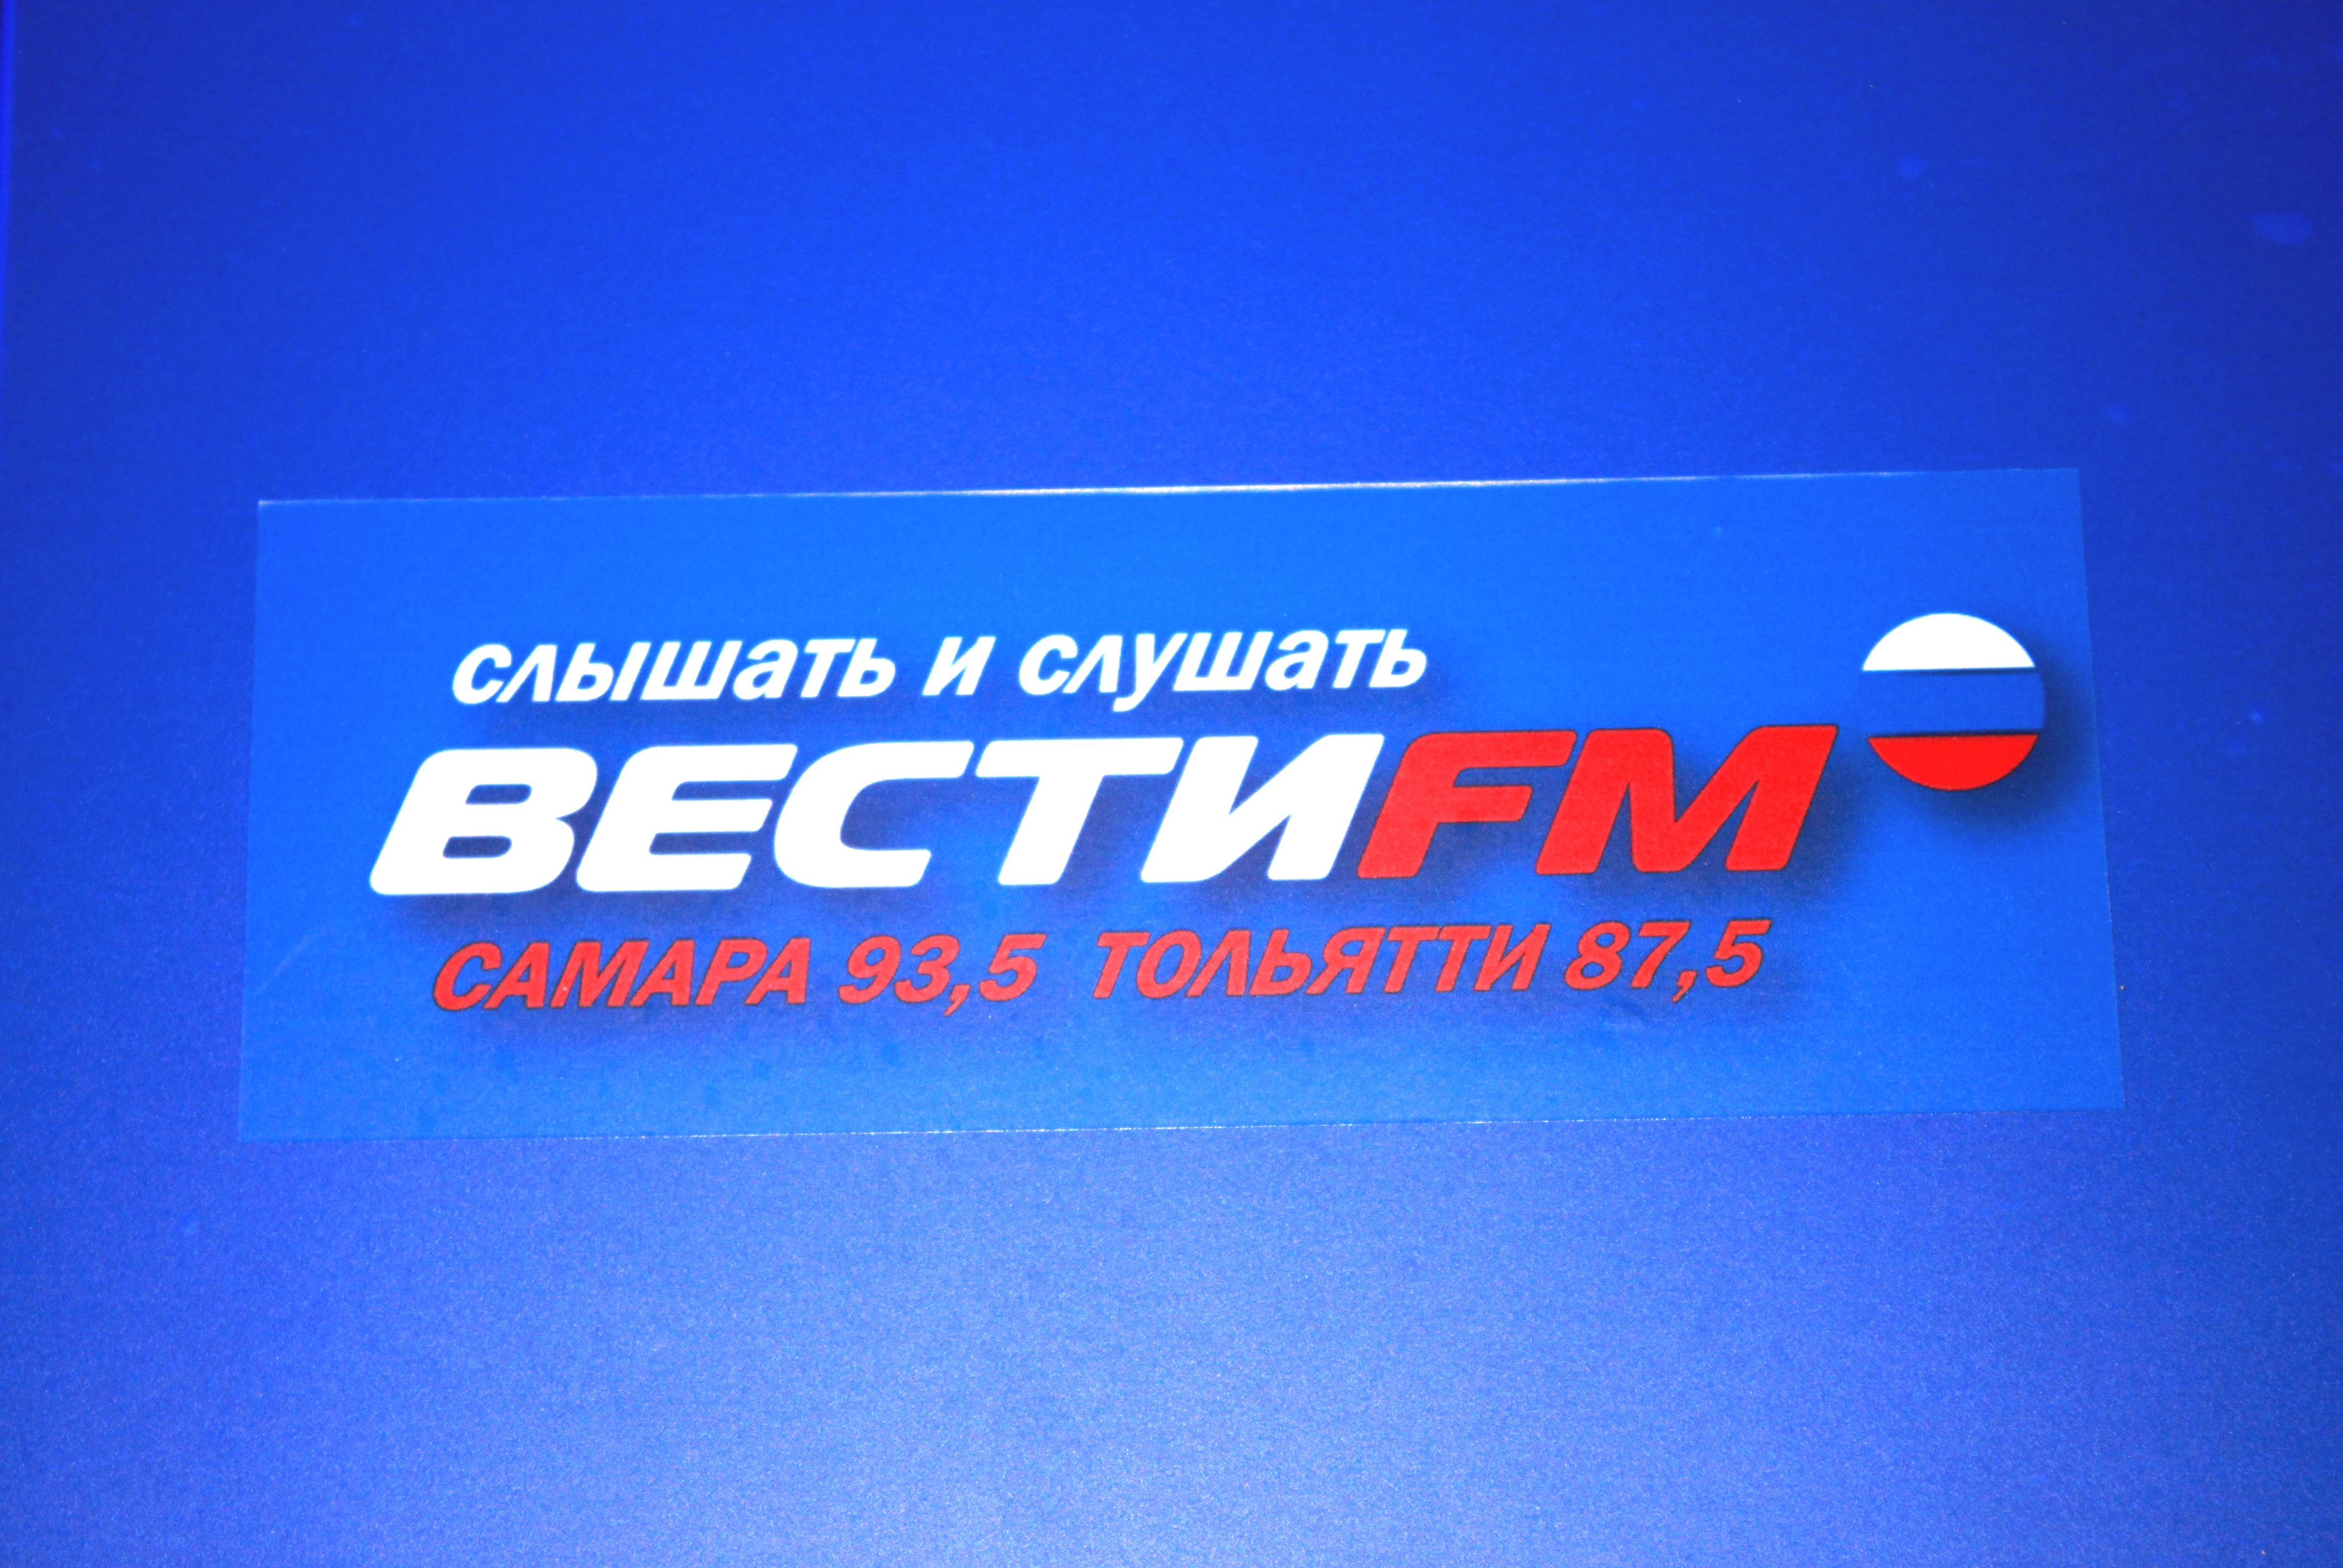 Трансляция радио вести фм. Вести ФМ. Вести fm логотип. Логотип радиостанции вести ФМ. Вести ФМ студия.